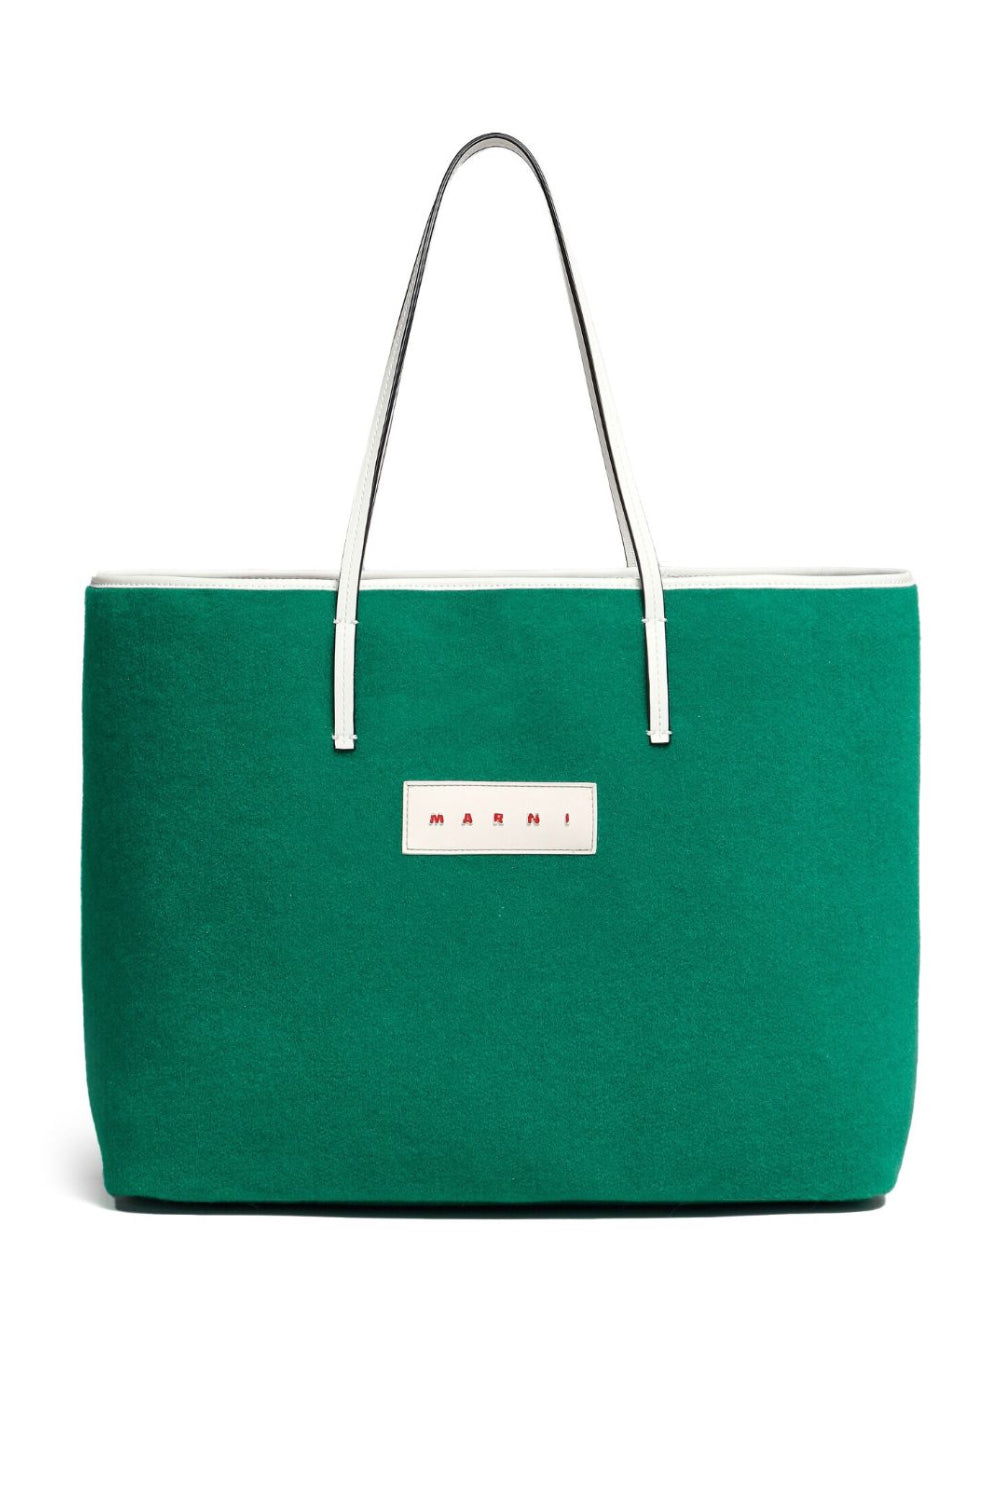 MARNI MARKET bag in green and orange technical wool